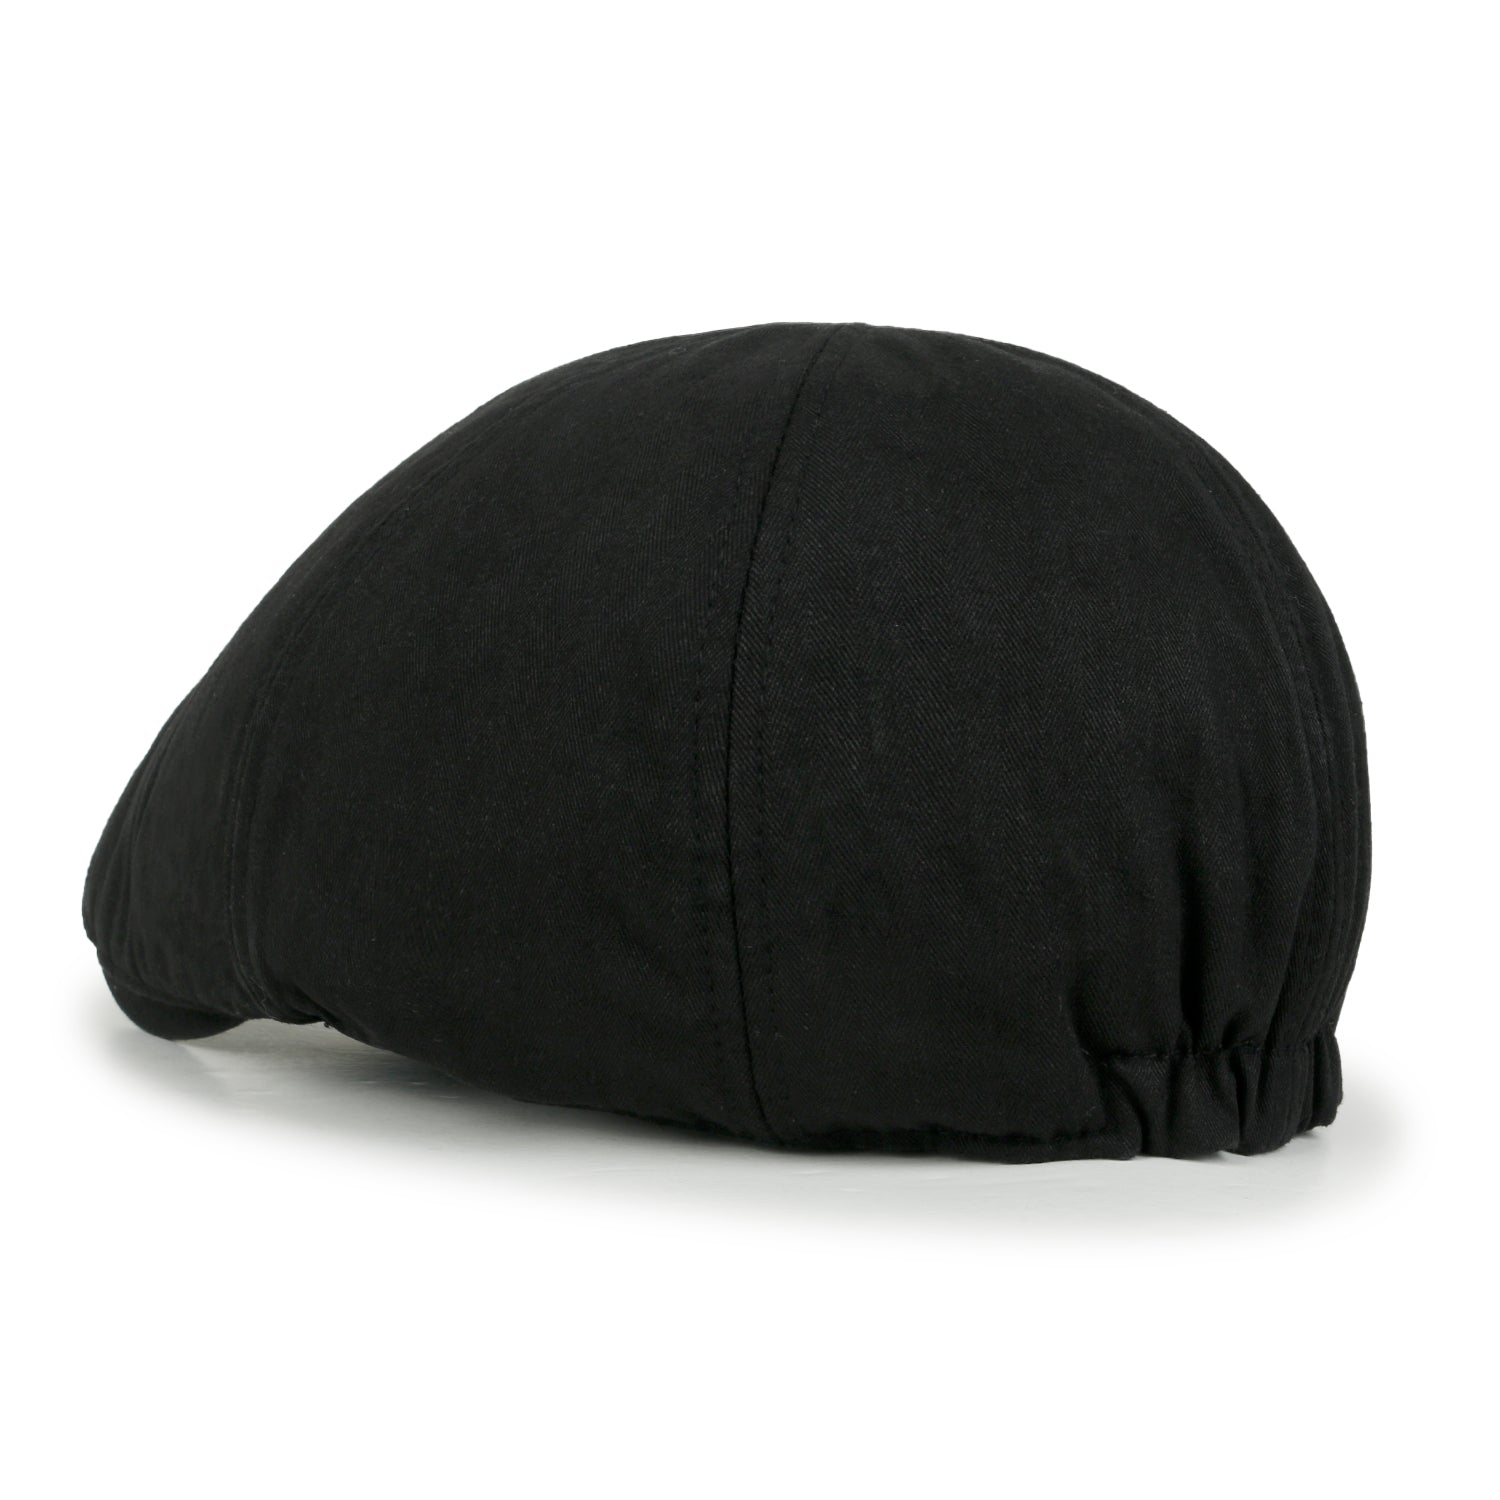 WETOO Men's Flat Cap Gatsby Newsboy Lvy Irish Hats Driving Cabbie Hunting Cap A1-cotton-black